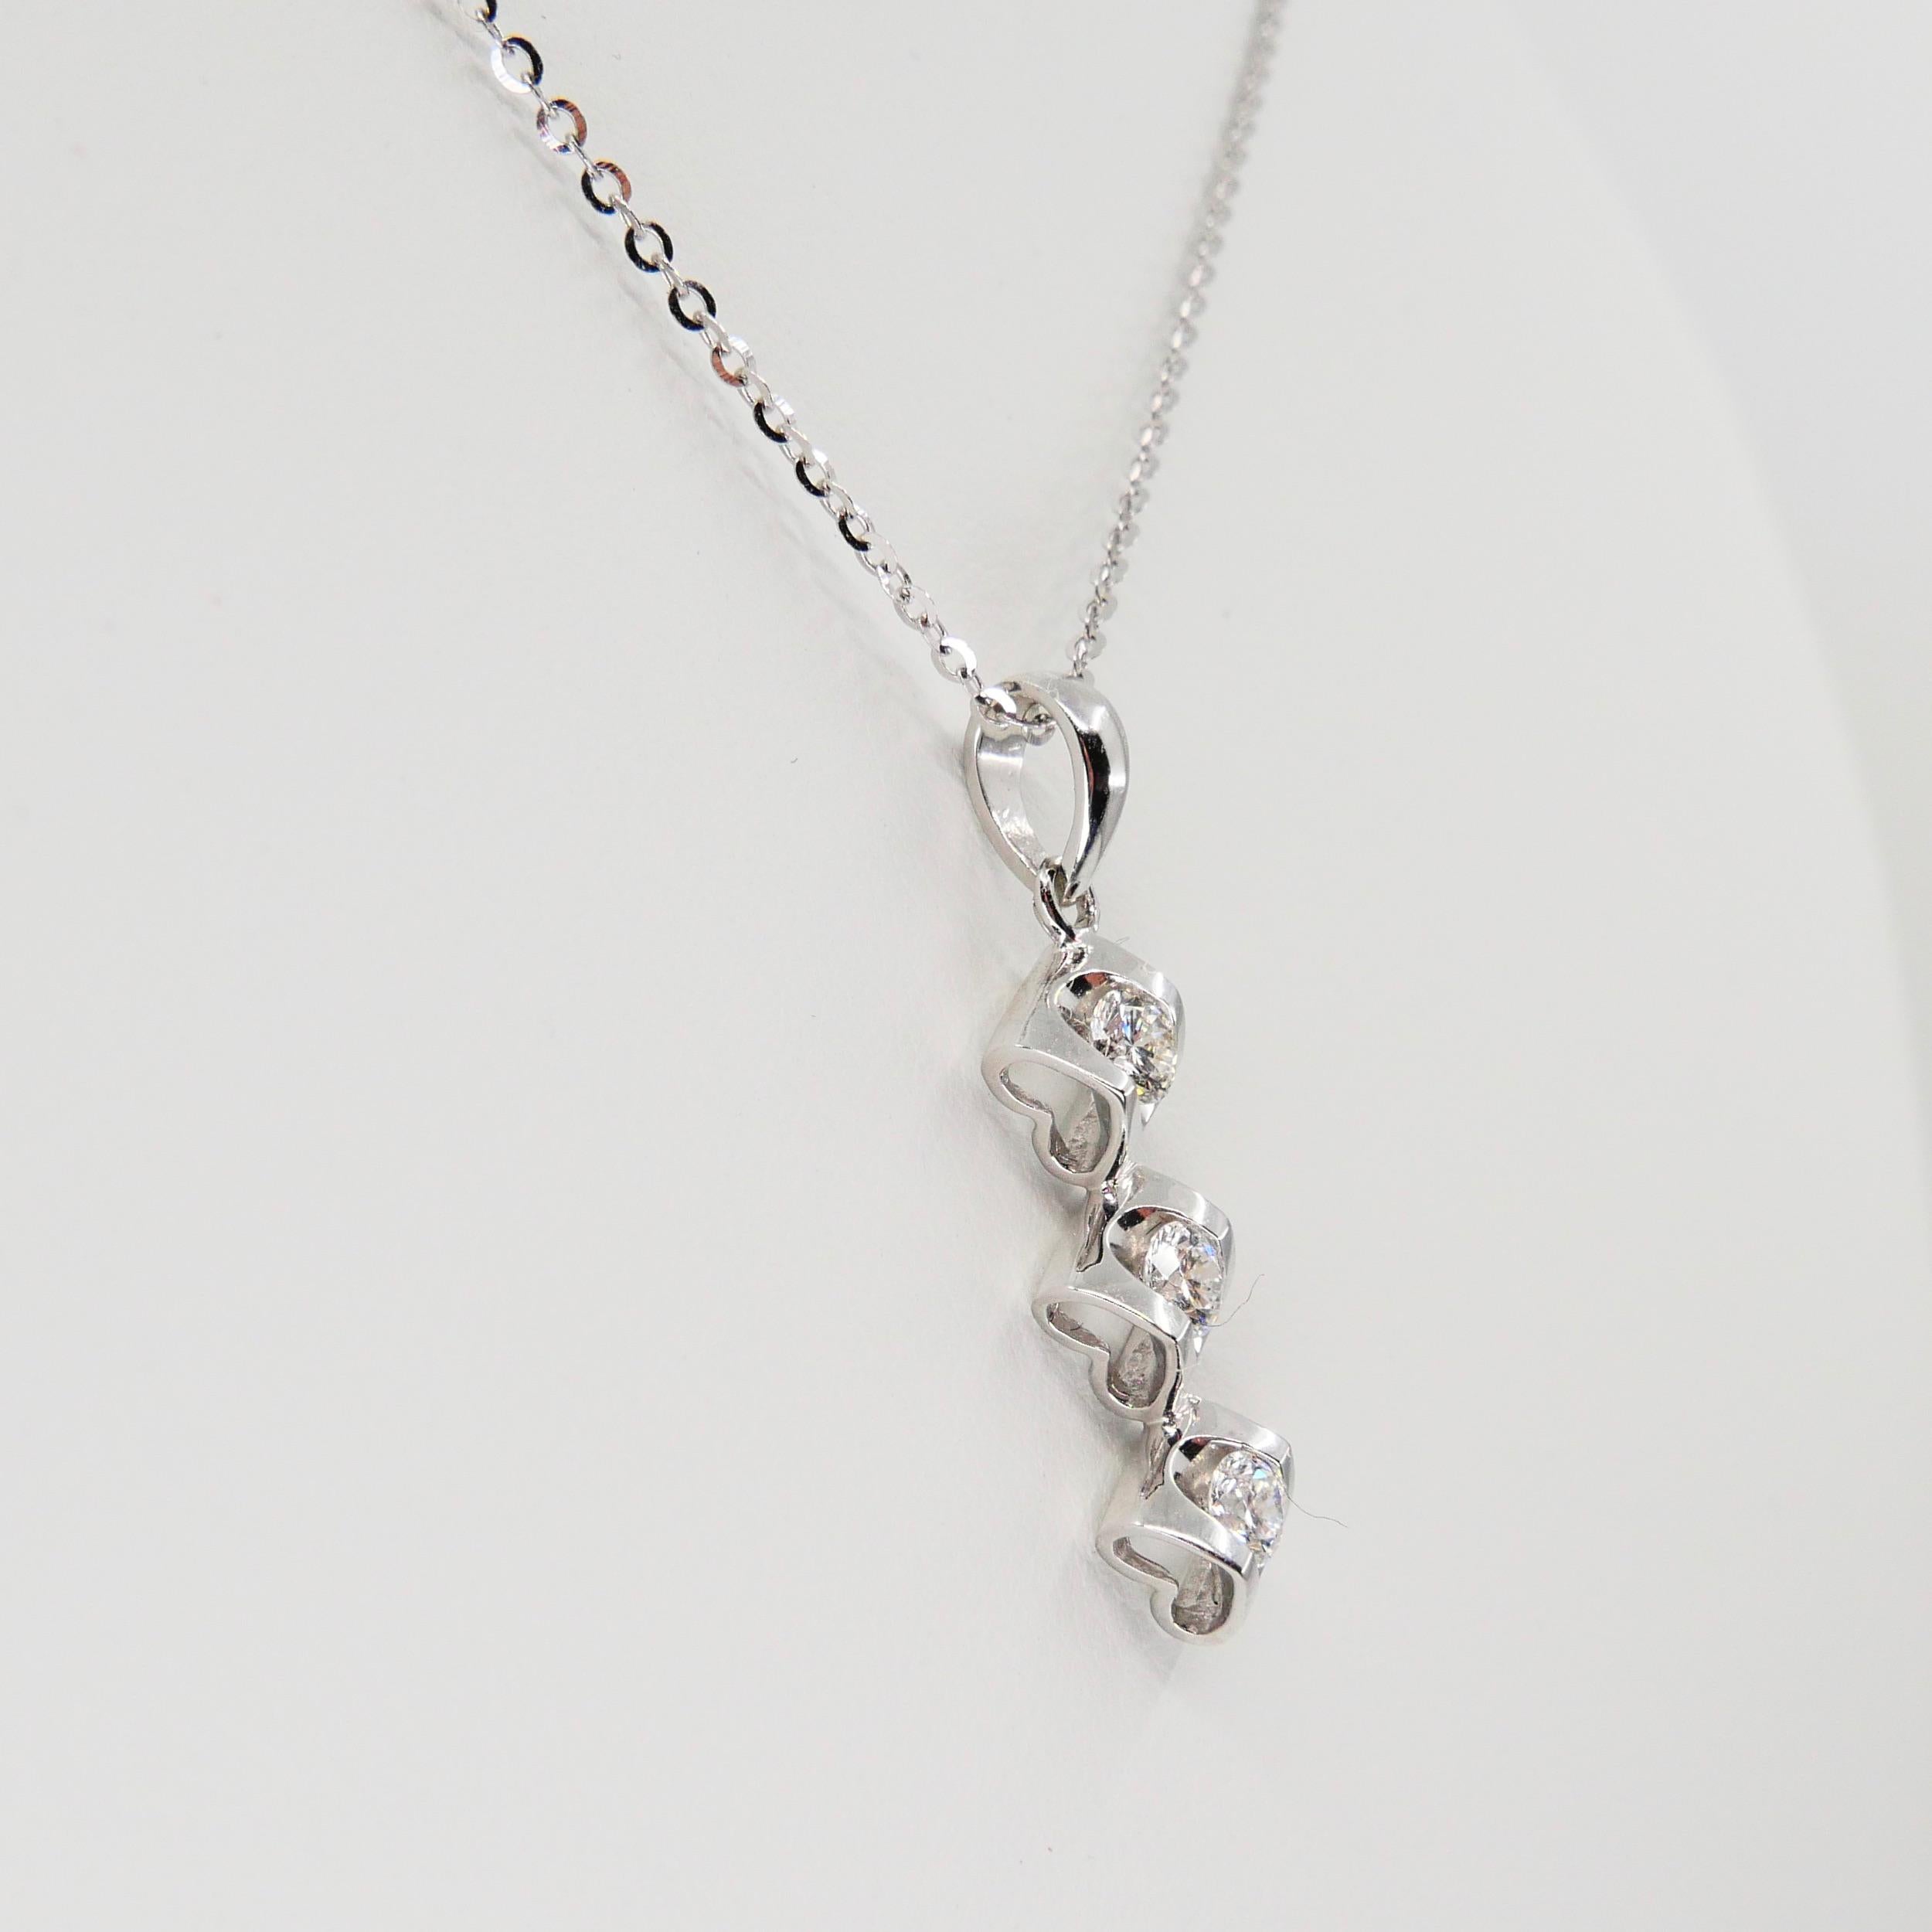 18 Karat White Gold and Diamond Drop Pendant Drop Necklace, Heart Shaped Motif 5